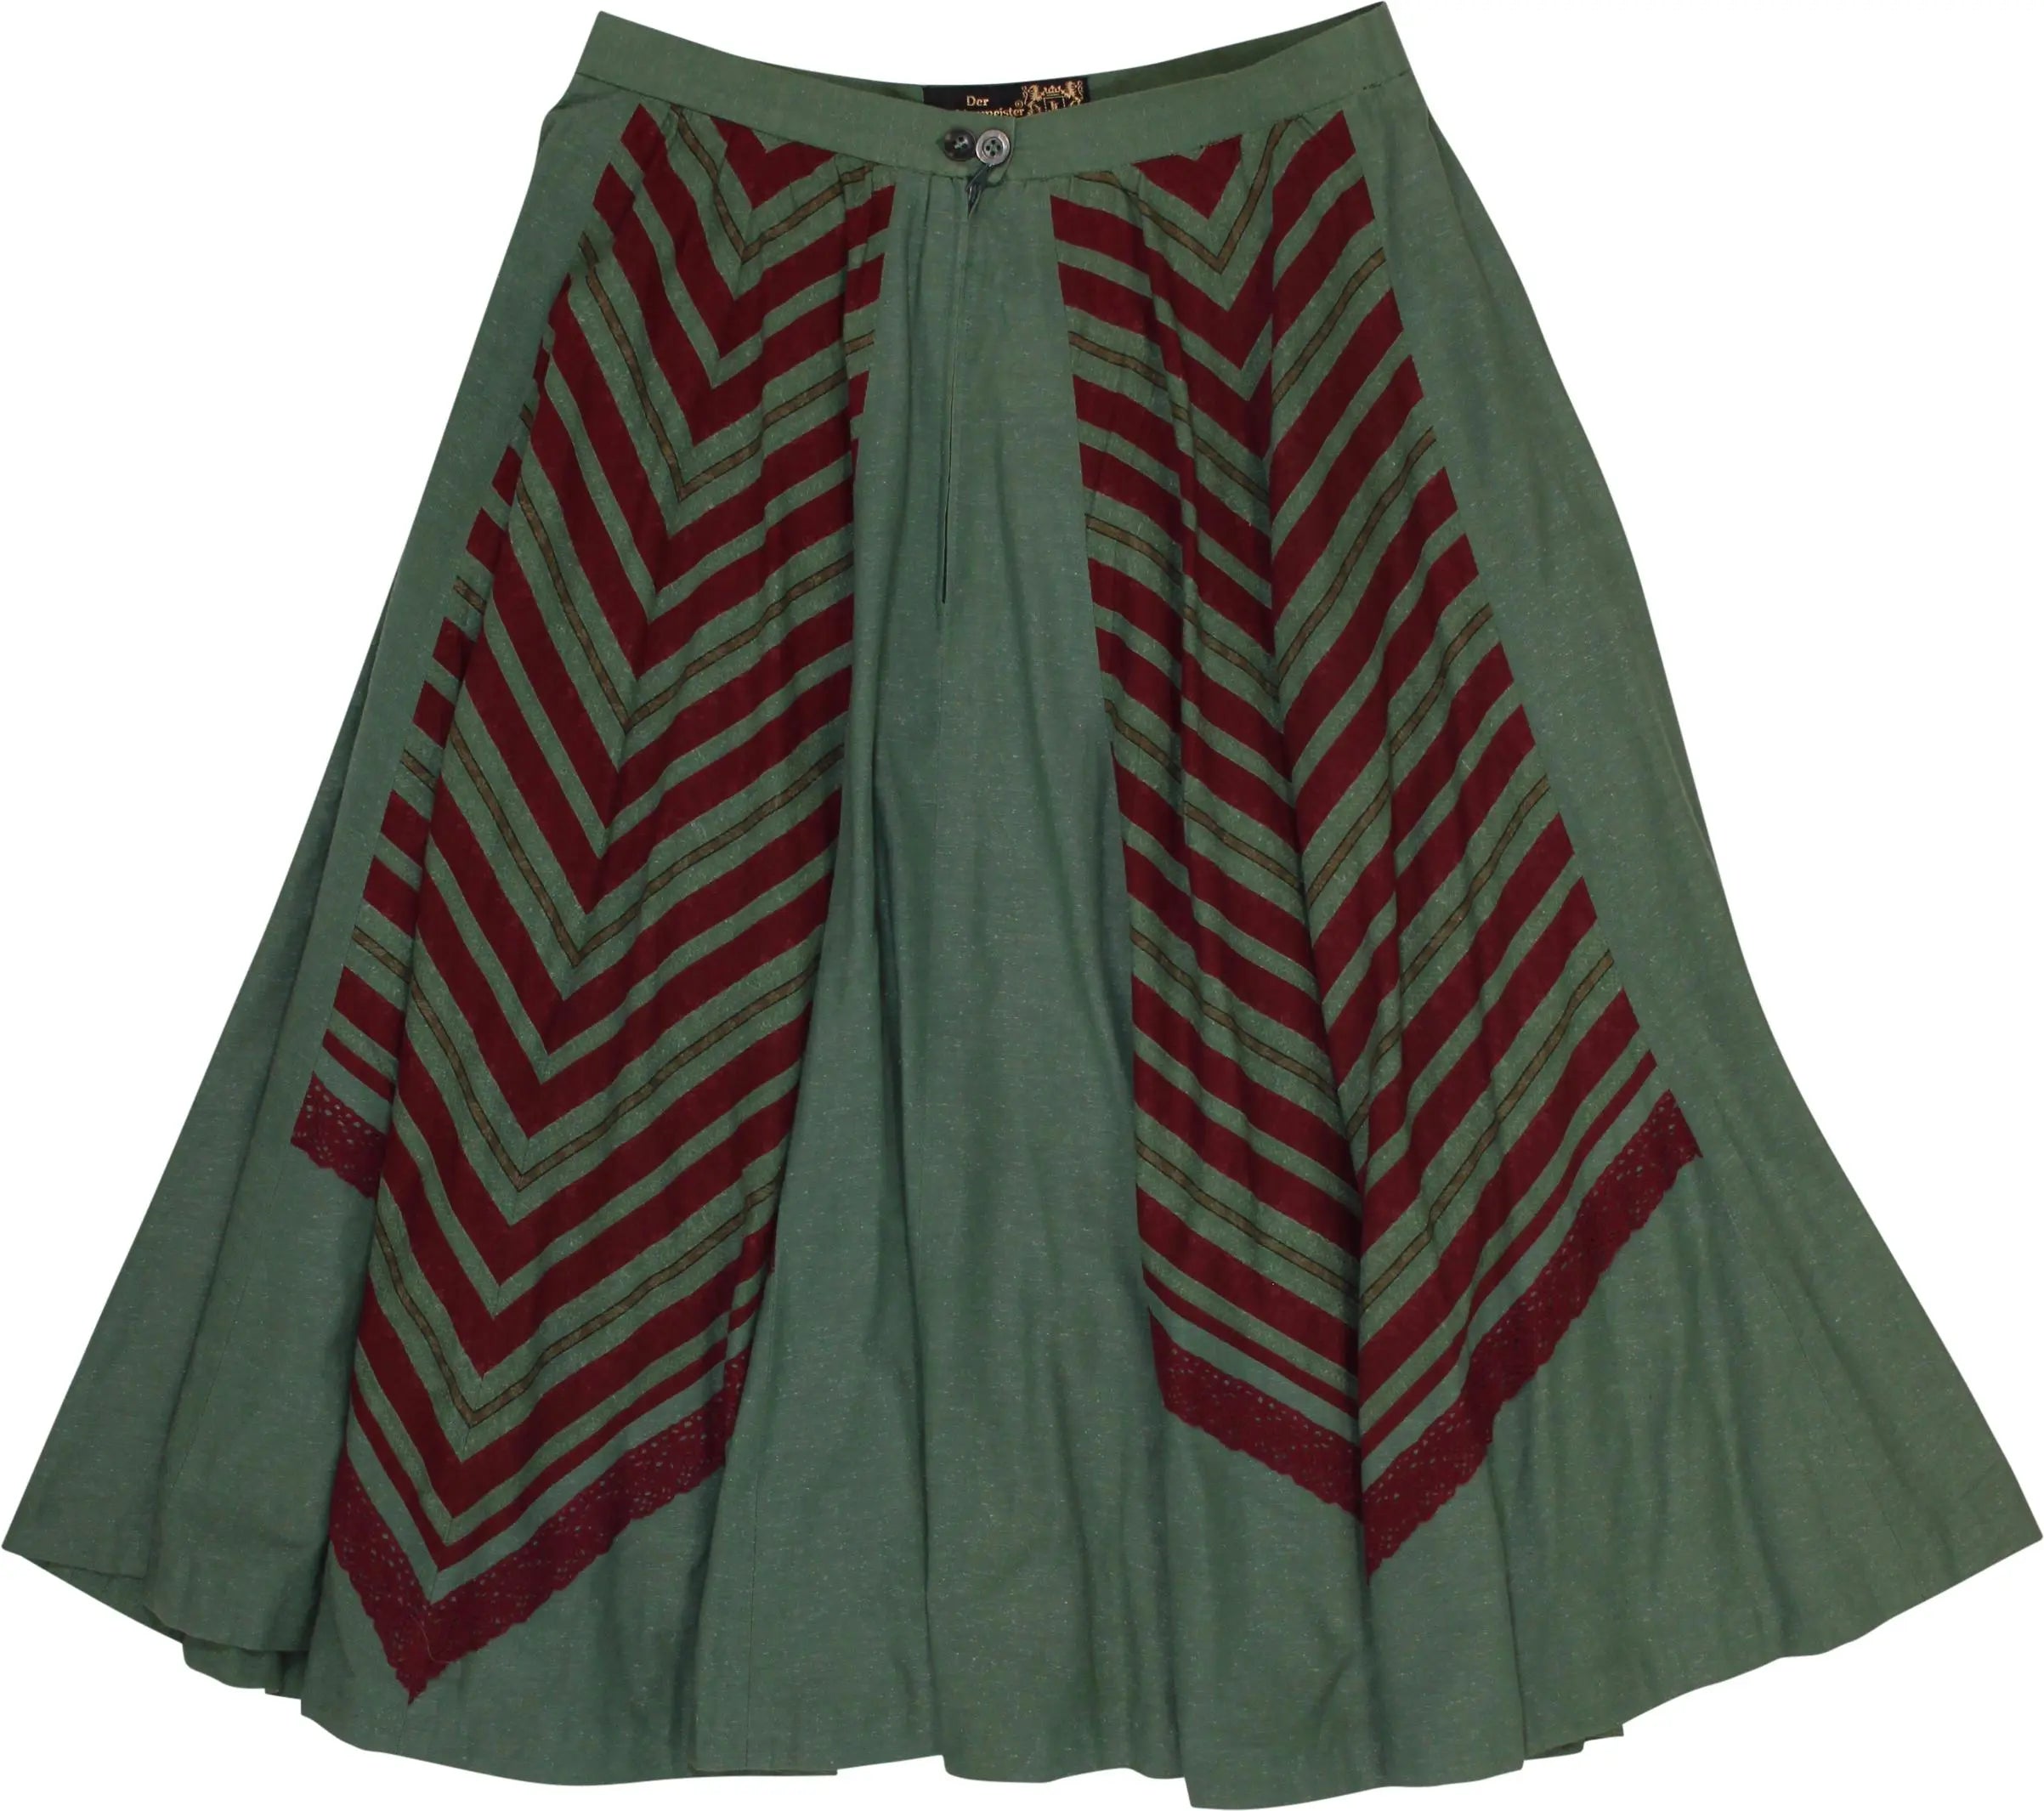 Der Trachtenmeister - Tiroler Skirt- ThriftTale.com - Vintage and second handclothing